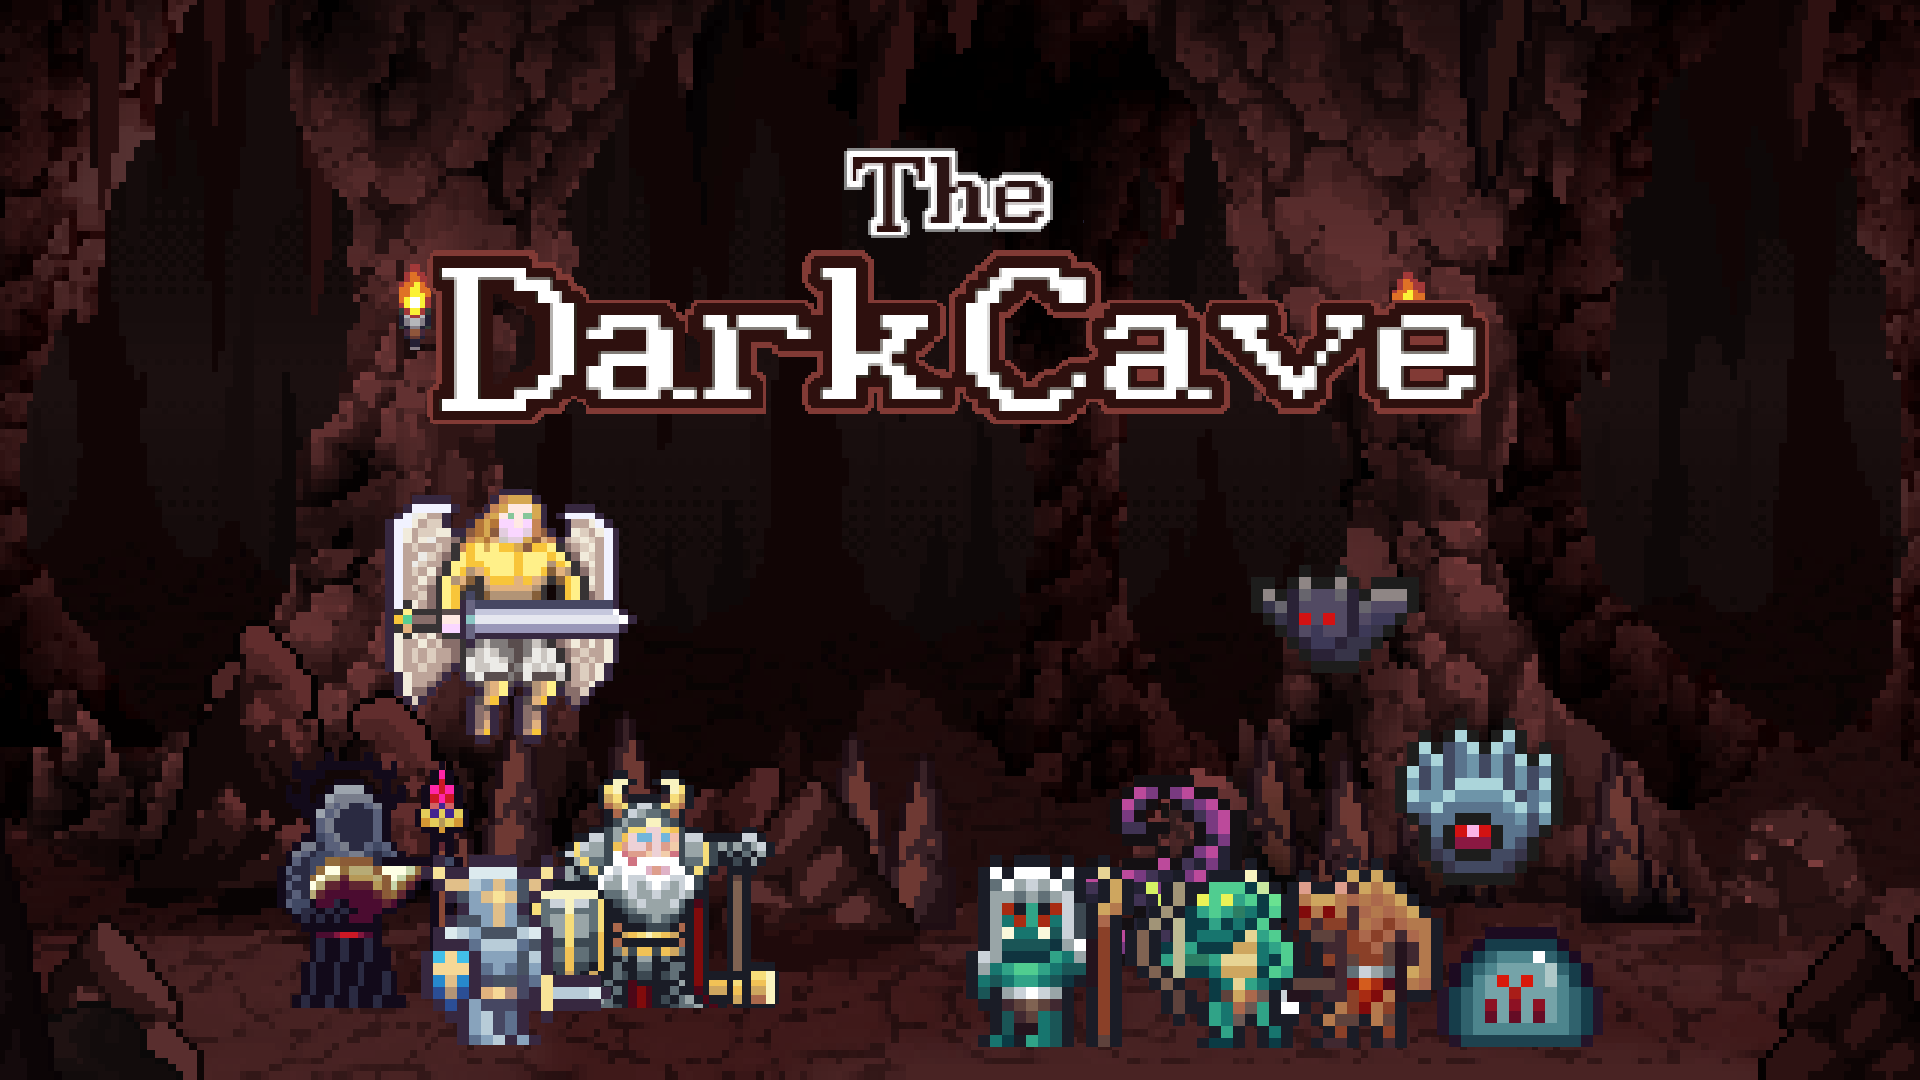 The Dark Cave